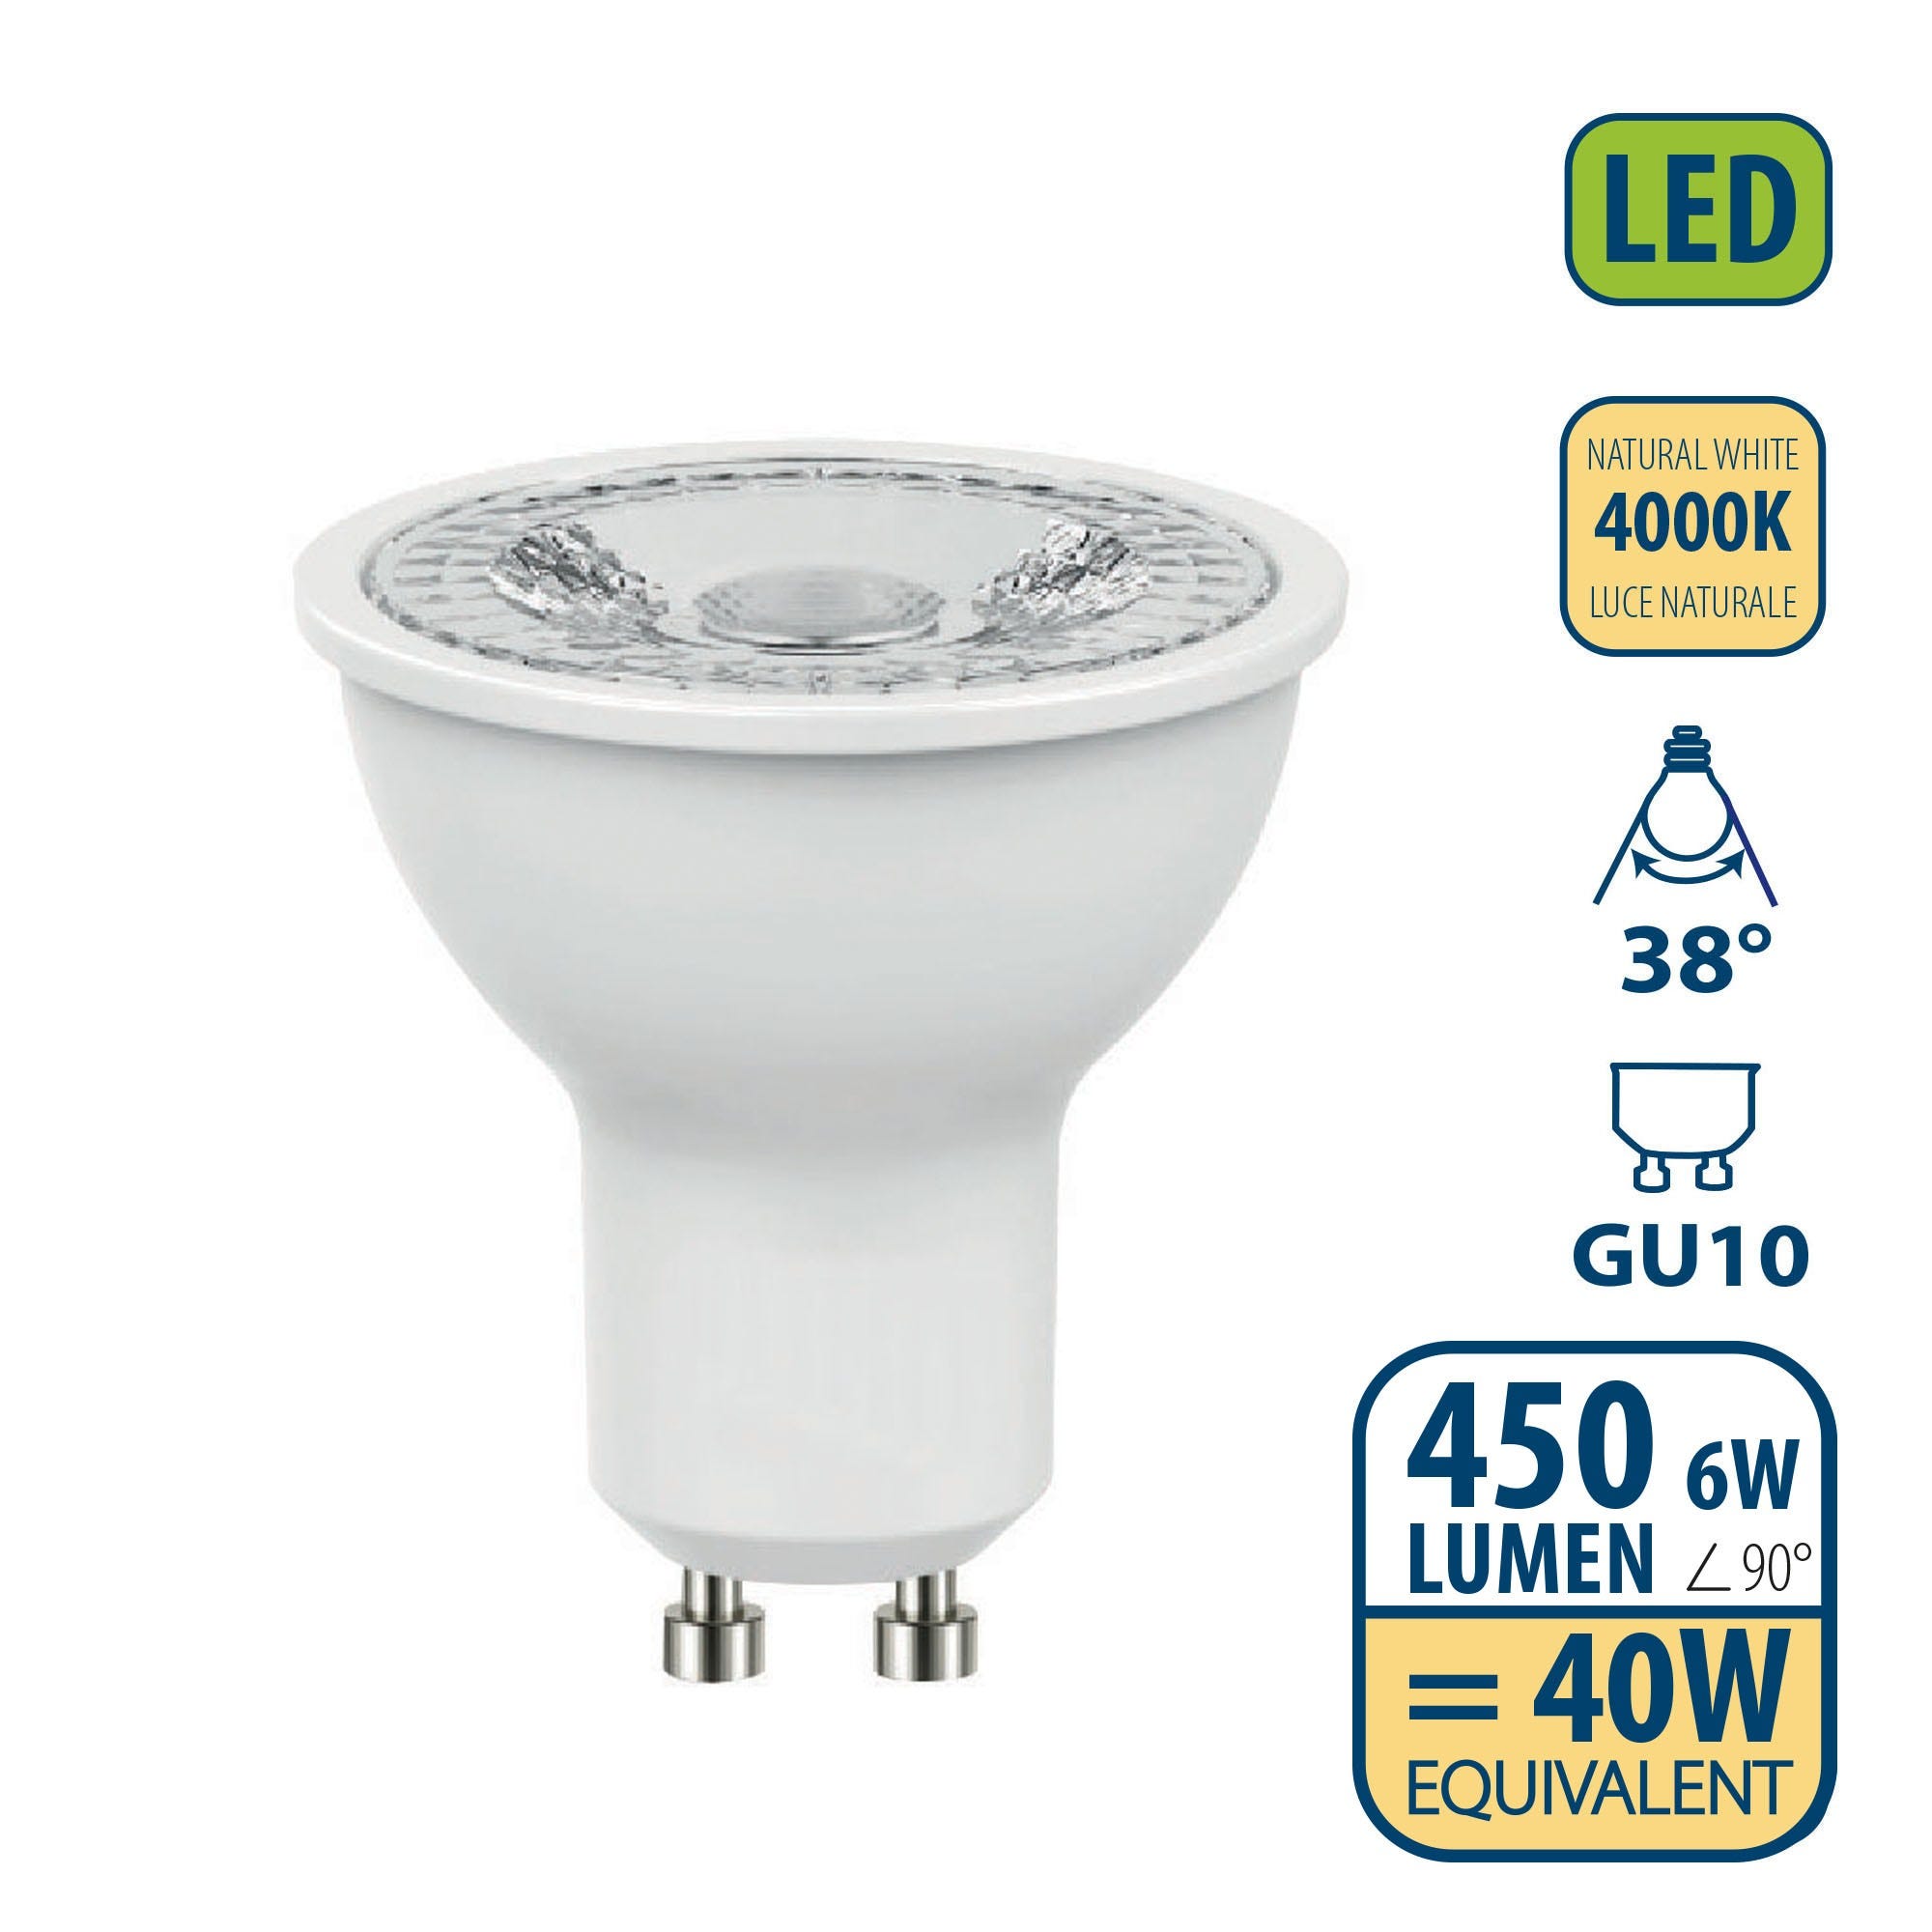 Lampadina SMD LED, Spot attacco GU10, 230V, 6W/450lm, 4000K, 38°